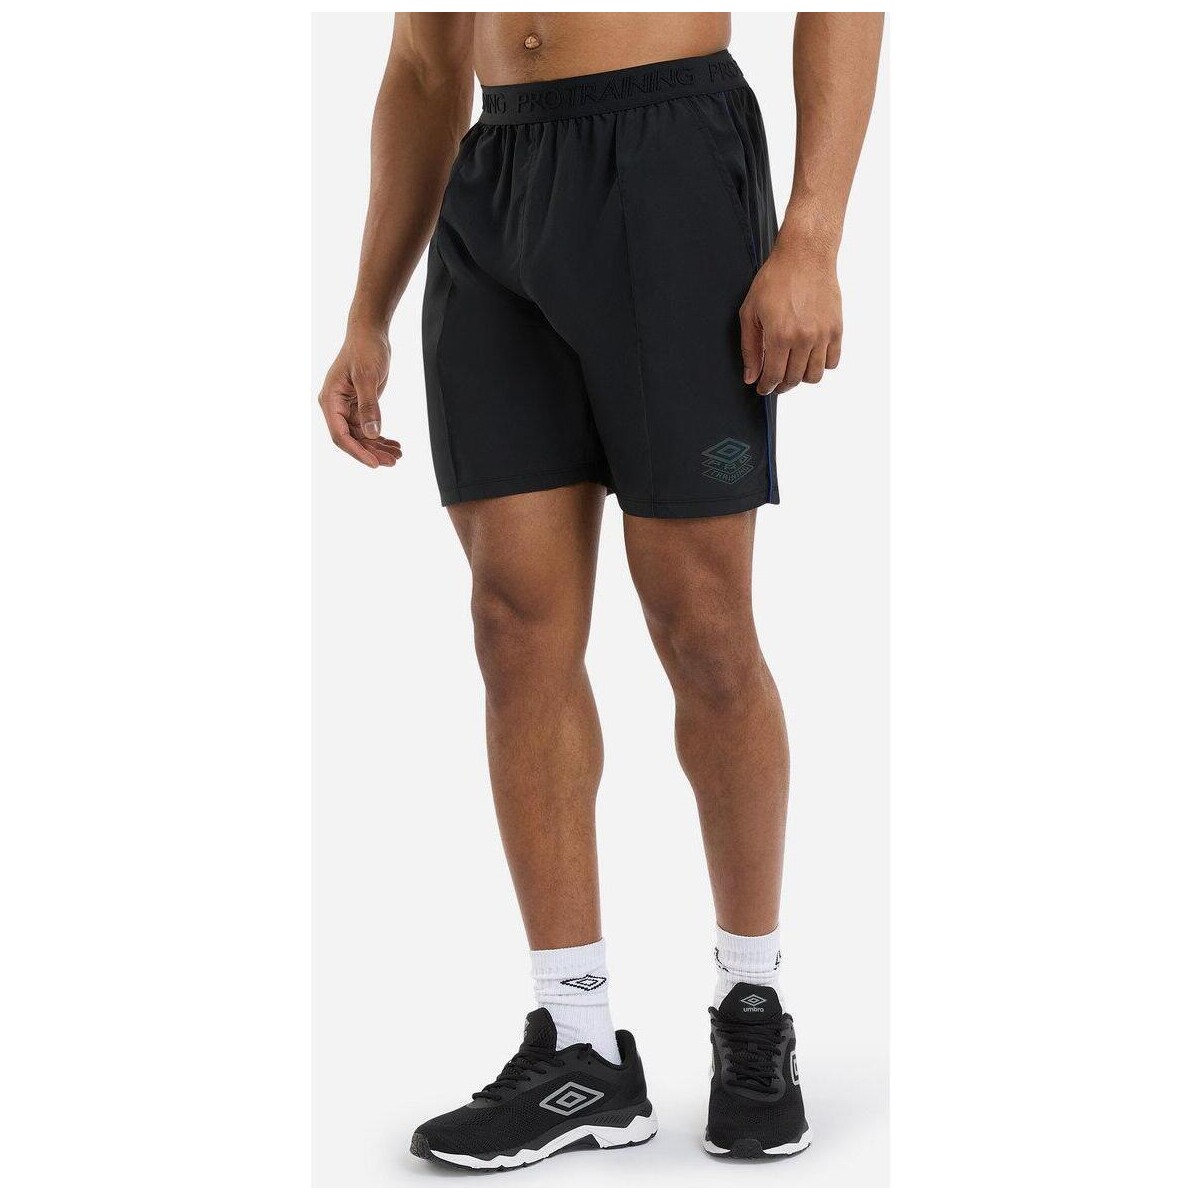 textil Hombre Shorts / Bermudas Umbro Pro Training Negro